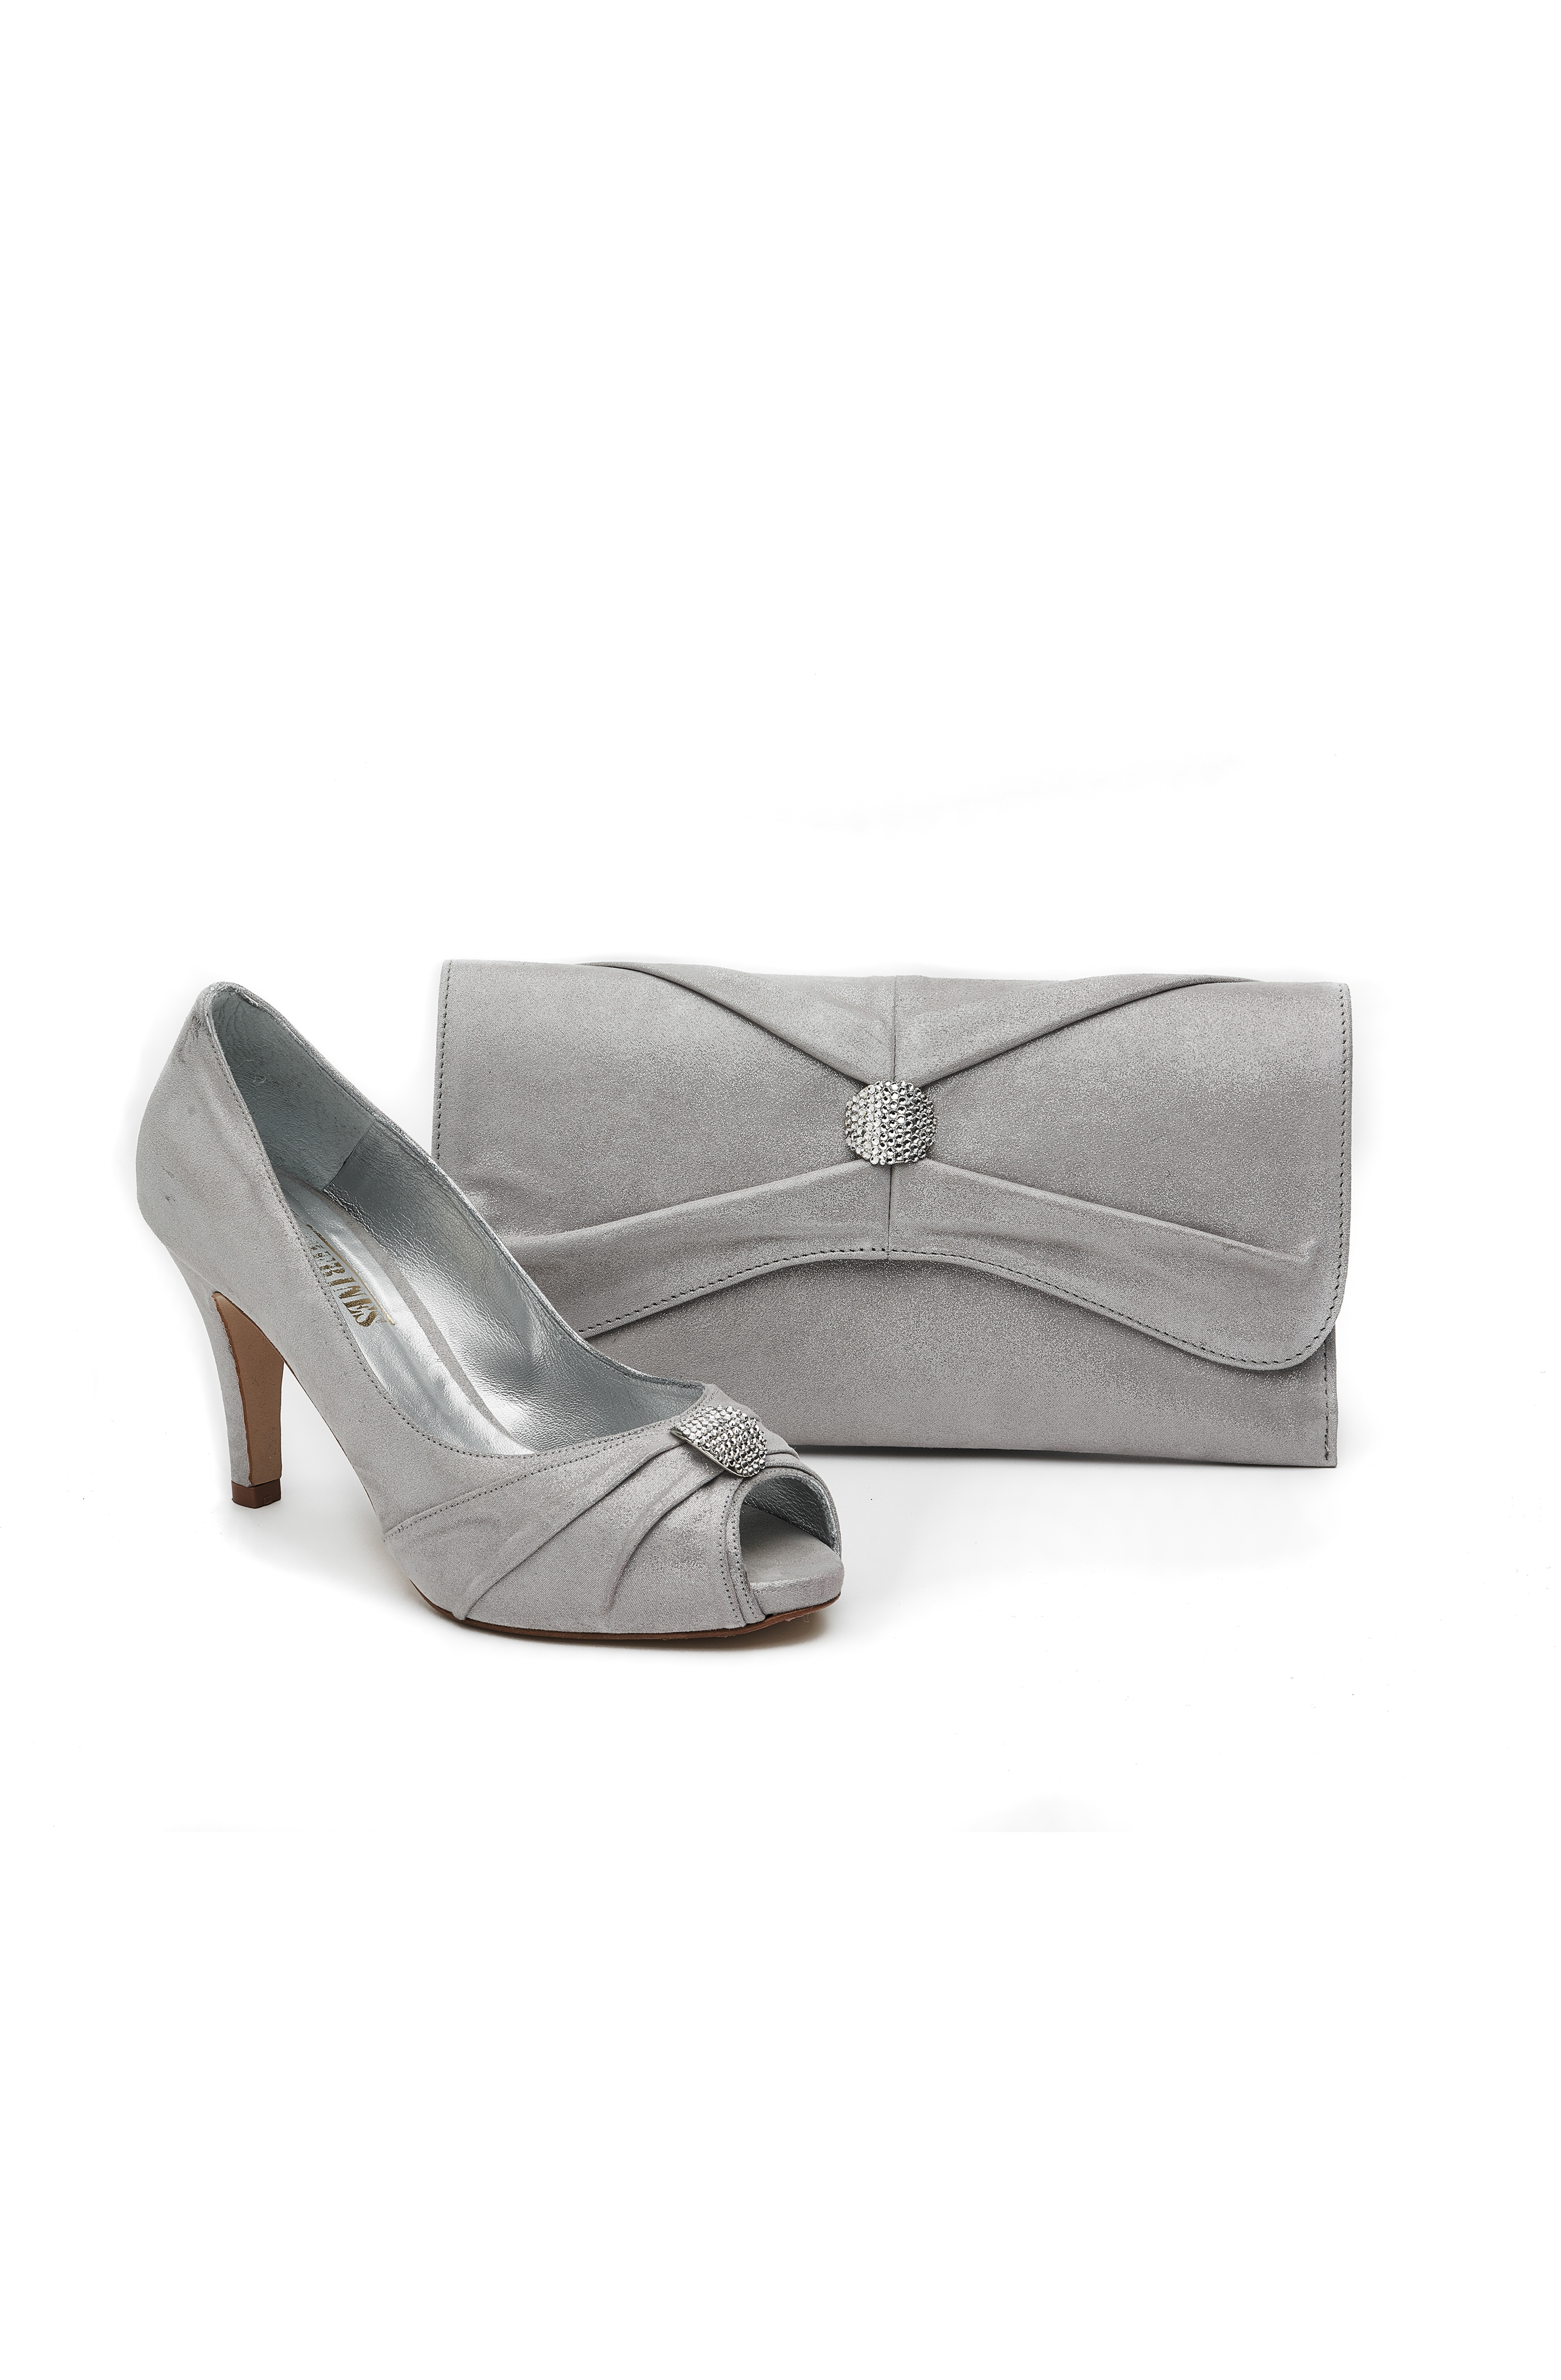 grey mid heel shoes